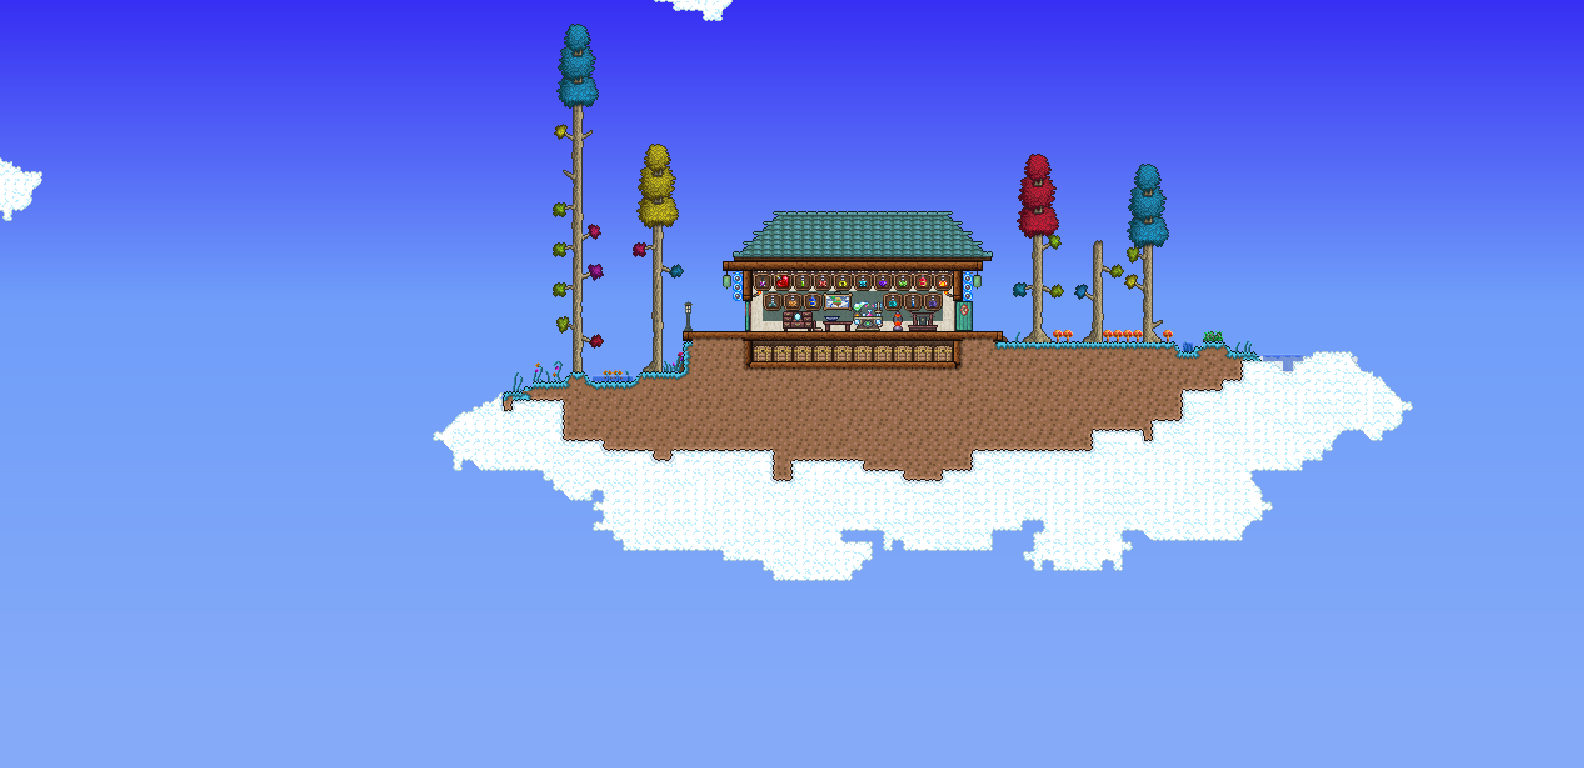 A potion shop on a floating island?